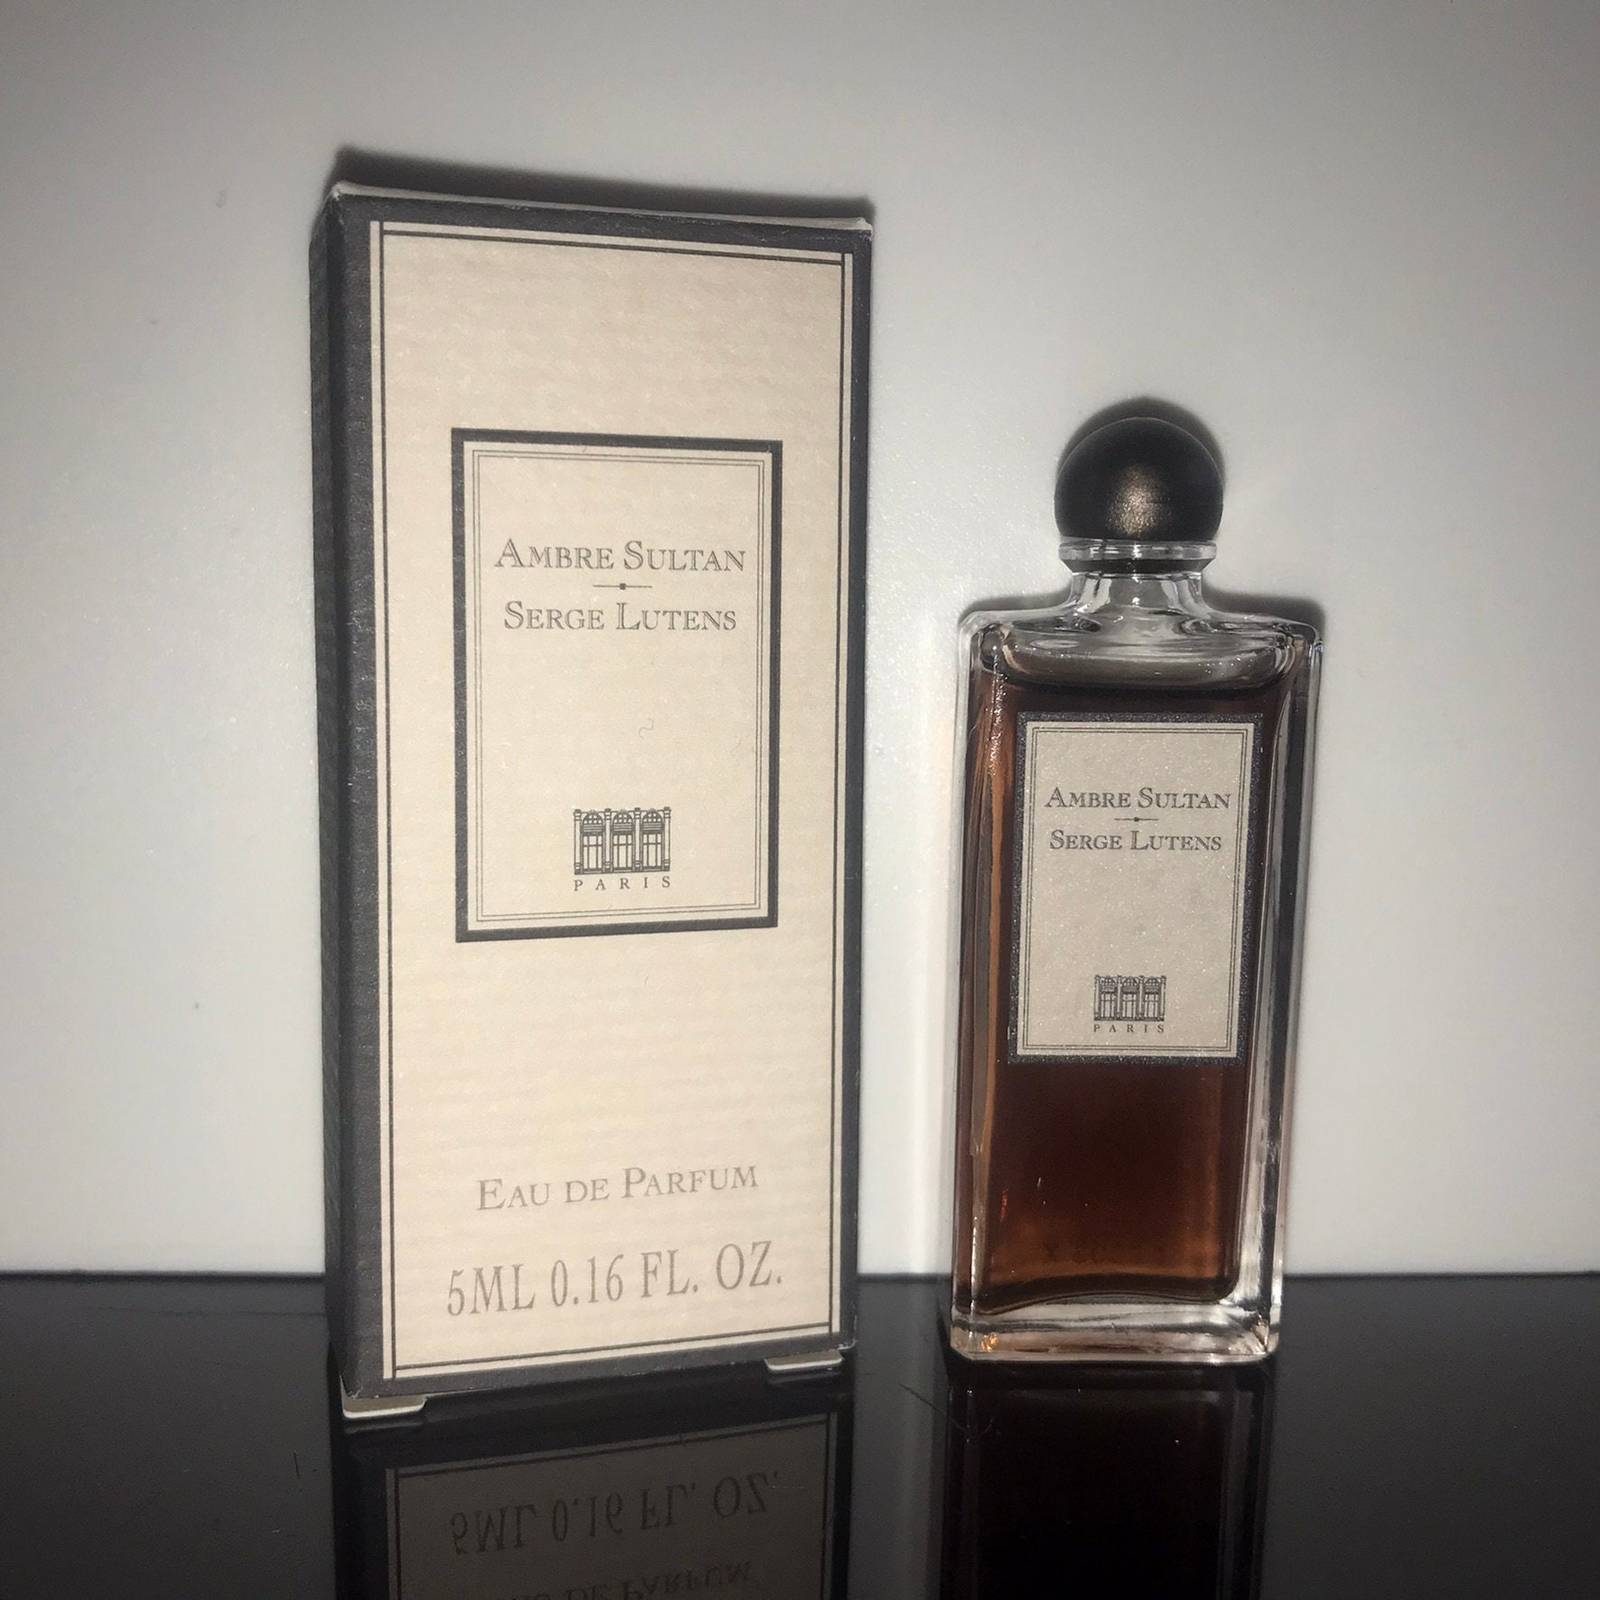 Serge Lutens Ambre Sultan Eau de Parfum - 5 ml - (1993) very hard to find!!! - $49.00